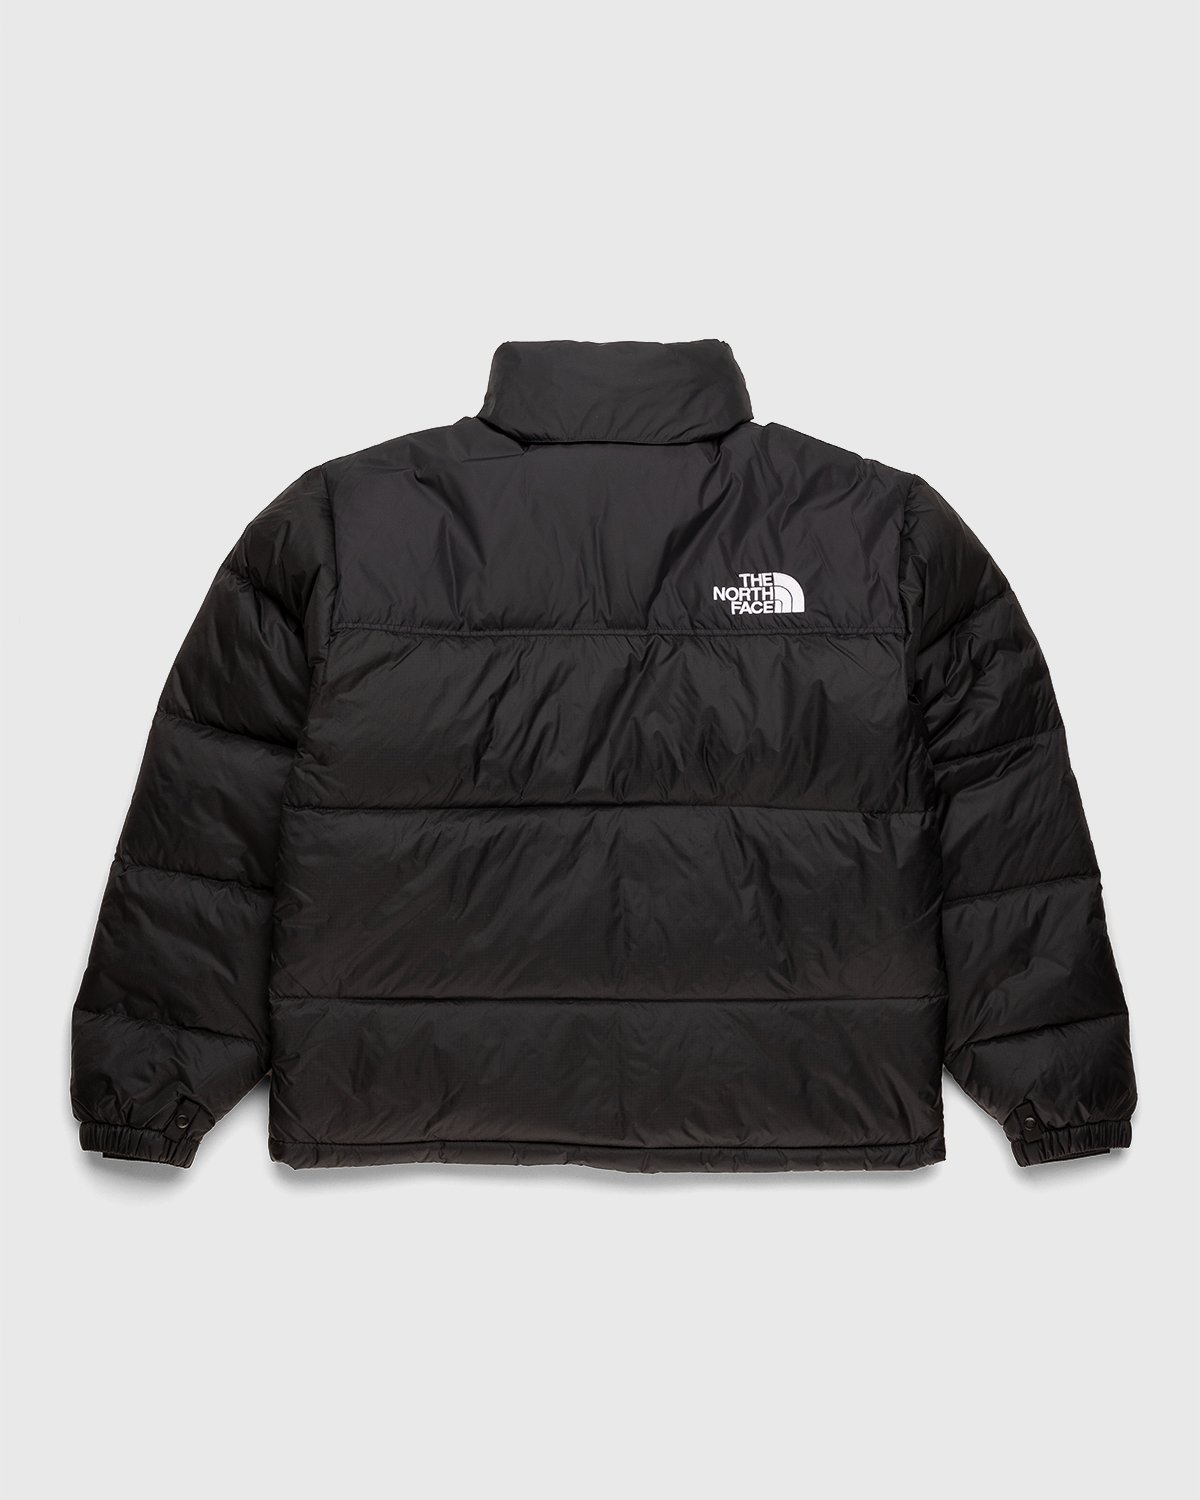 The North Face - 1996 Retro Nuptse Jacket Black - Clothing - Black - Image 2